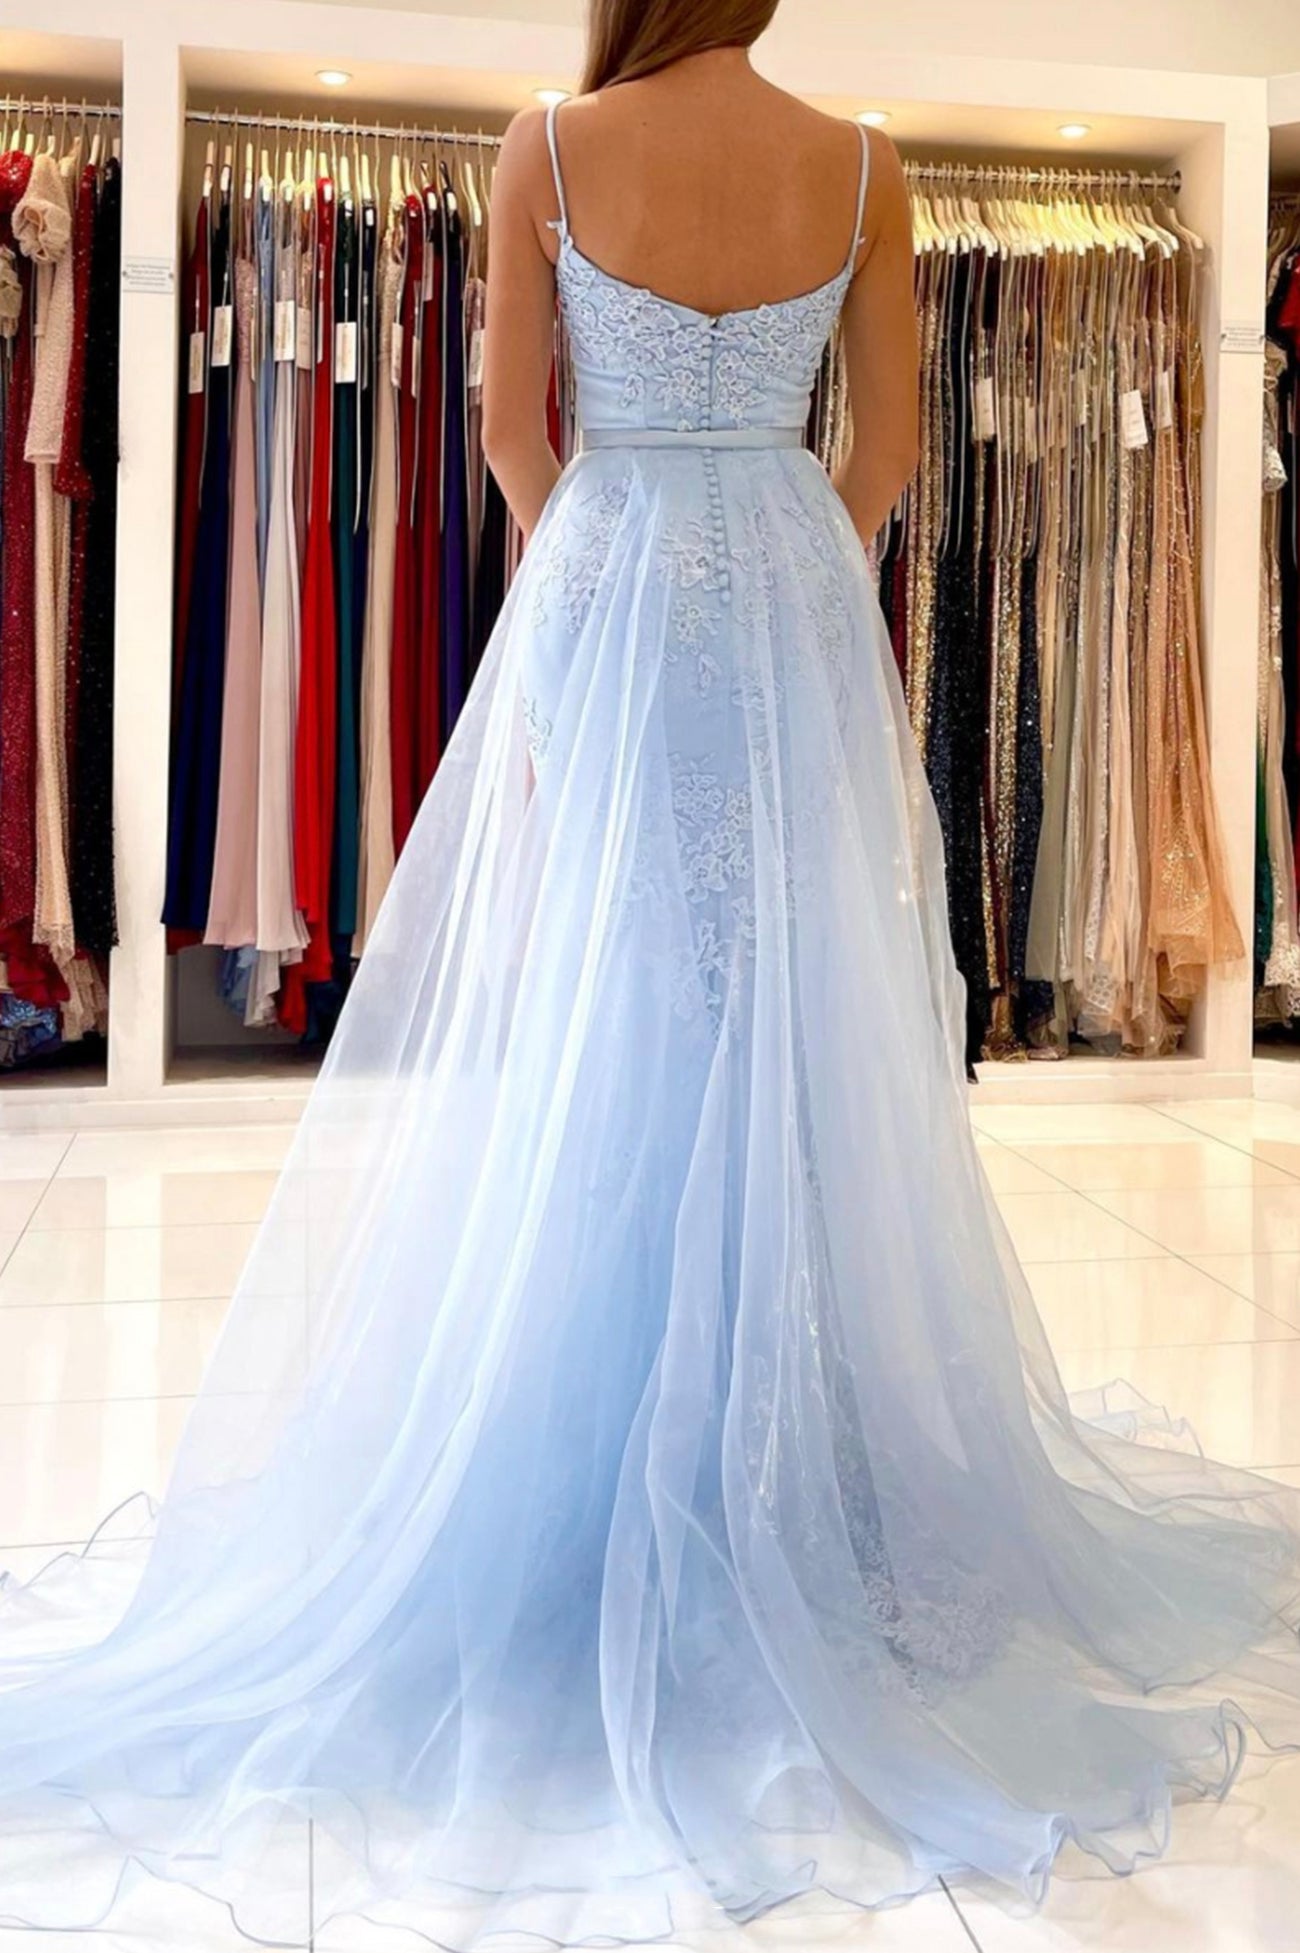 Blue Spaghetti Strap Lace Long Prom Dress, Mermaid Evening Dress